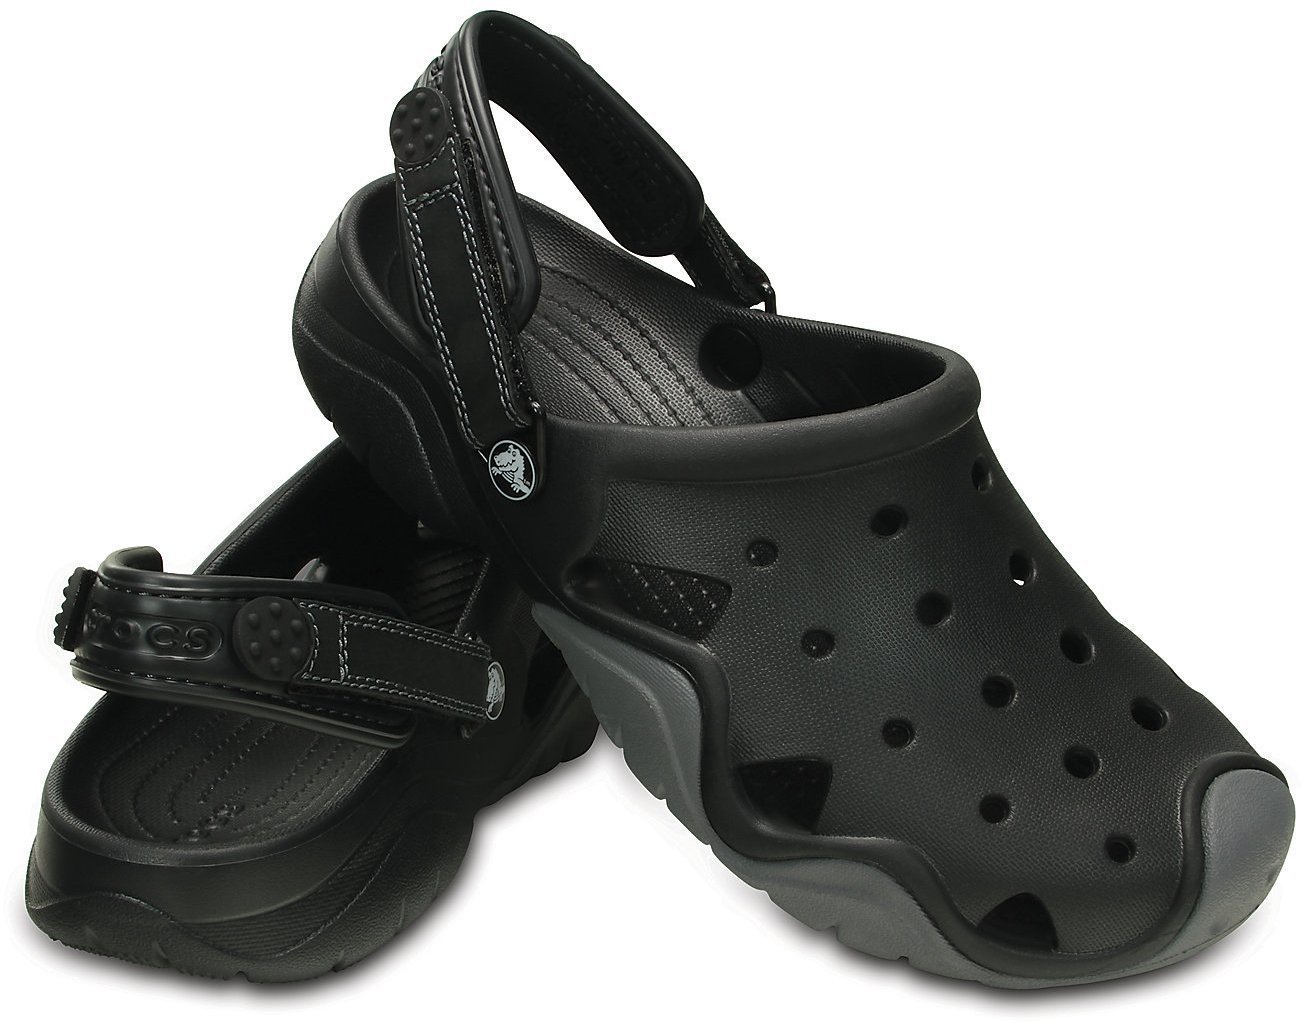 Jachtařská obuv Crocs Swiftwater Clog Men Black/Charcoal 46-47